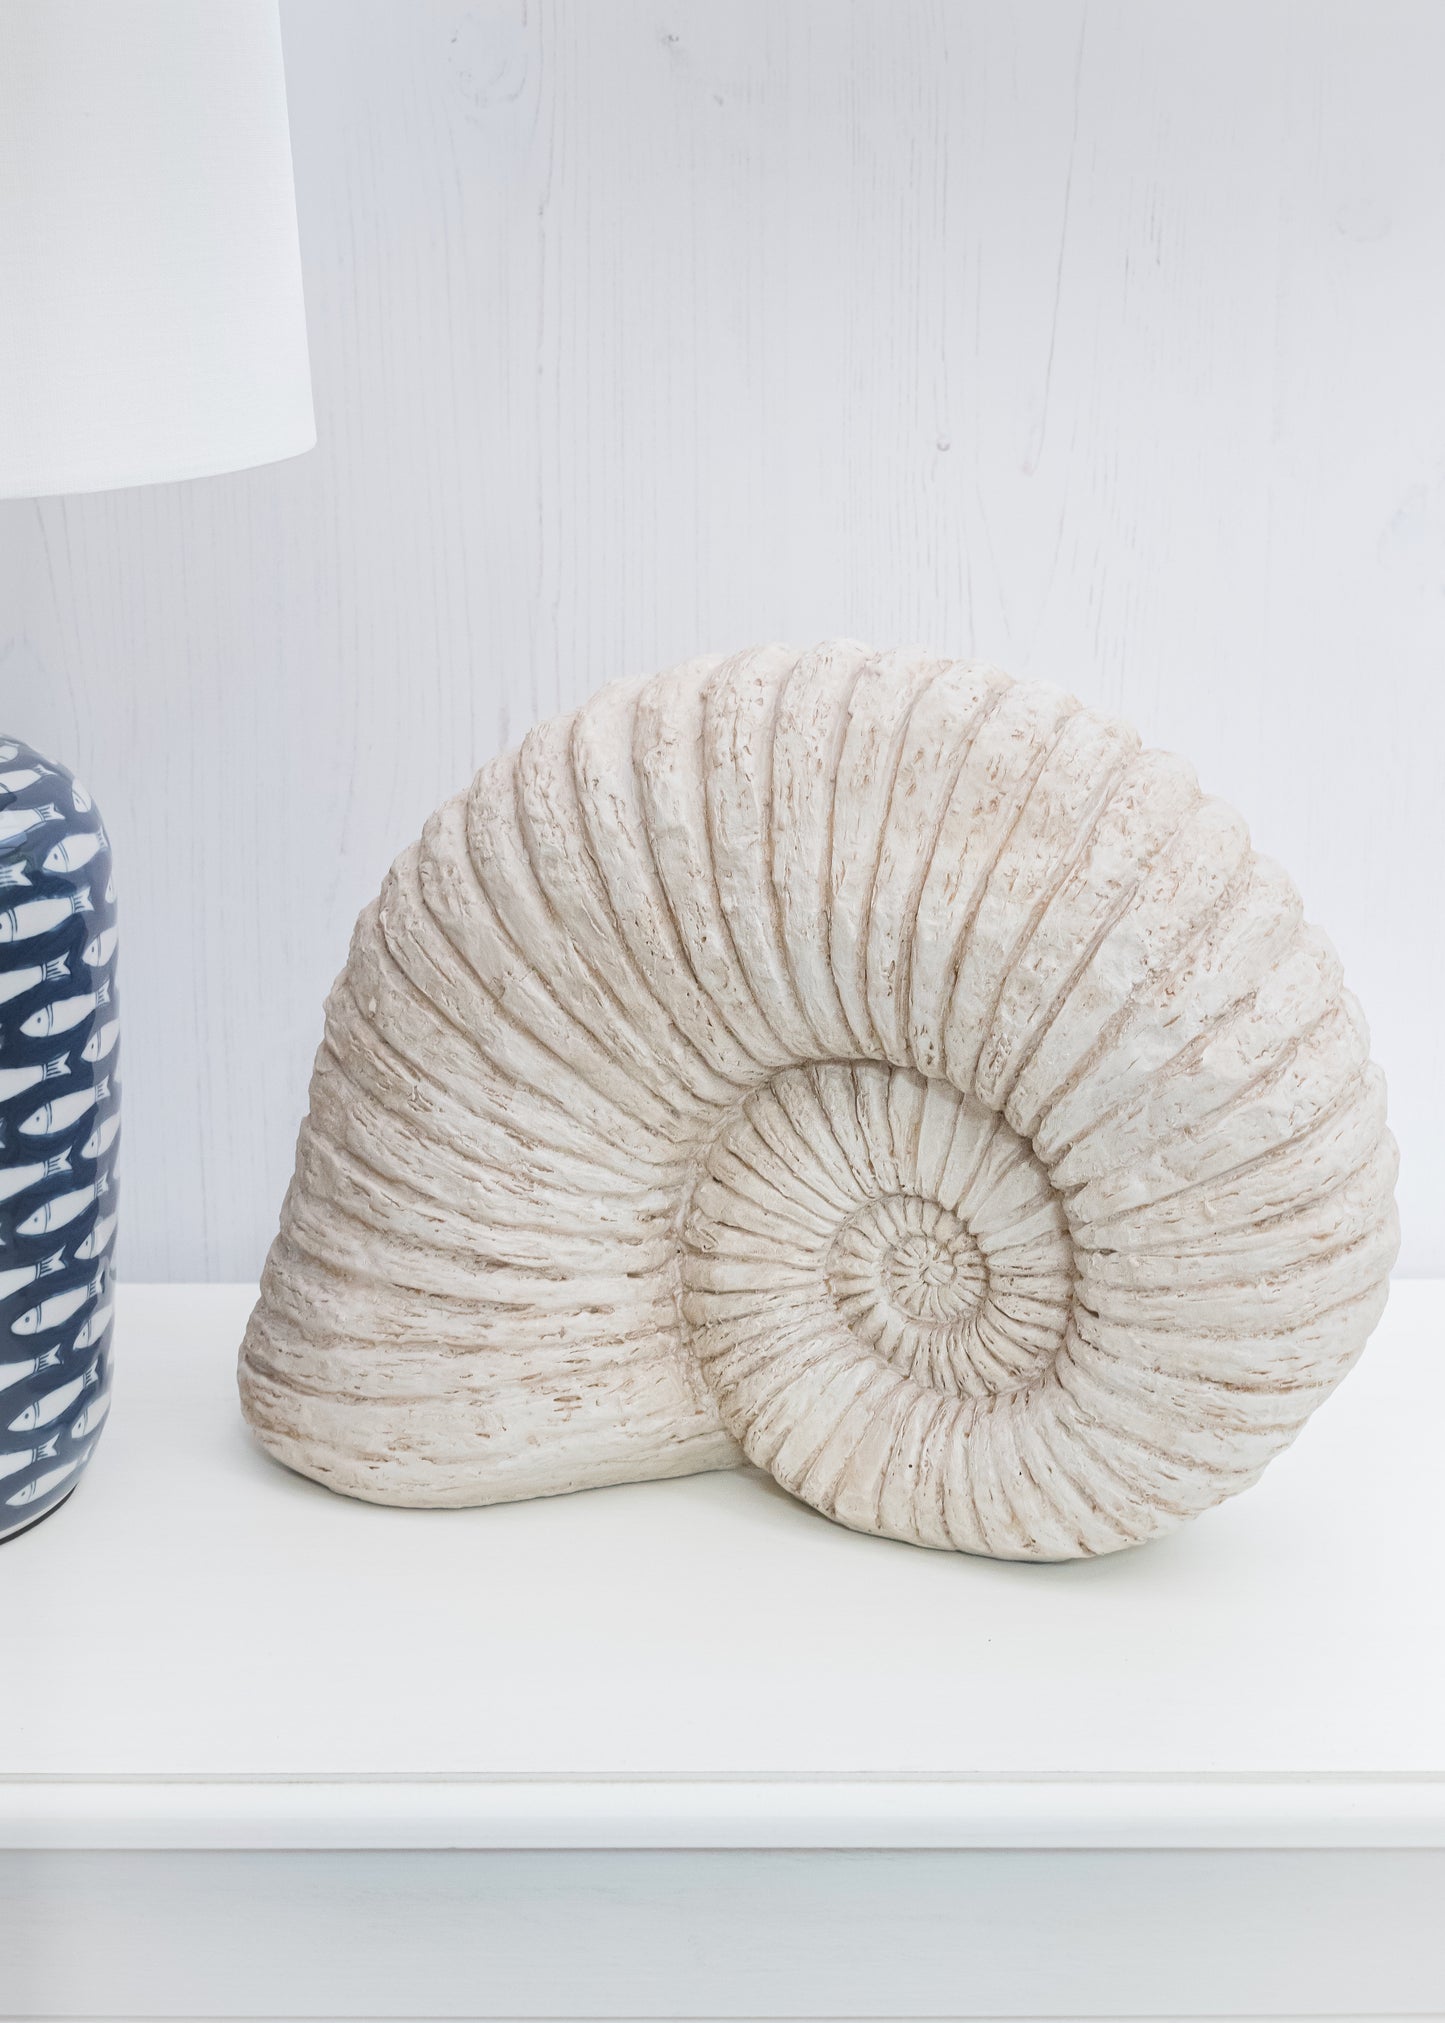 Ammonite Shell Sculpture